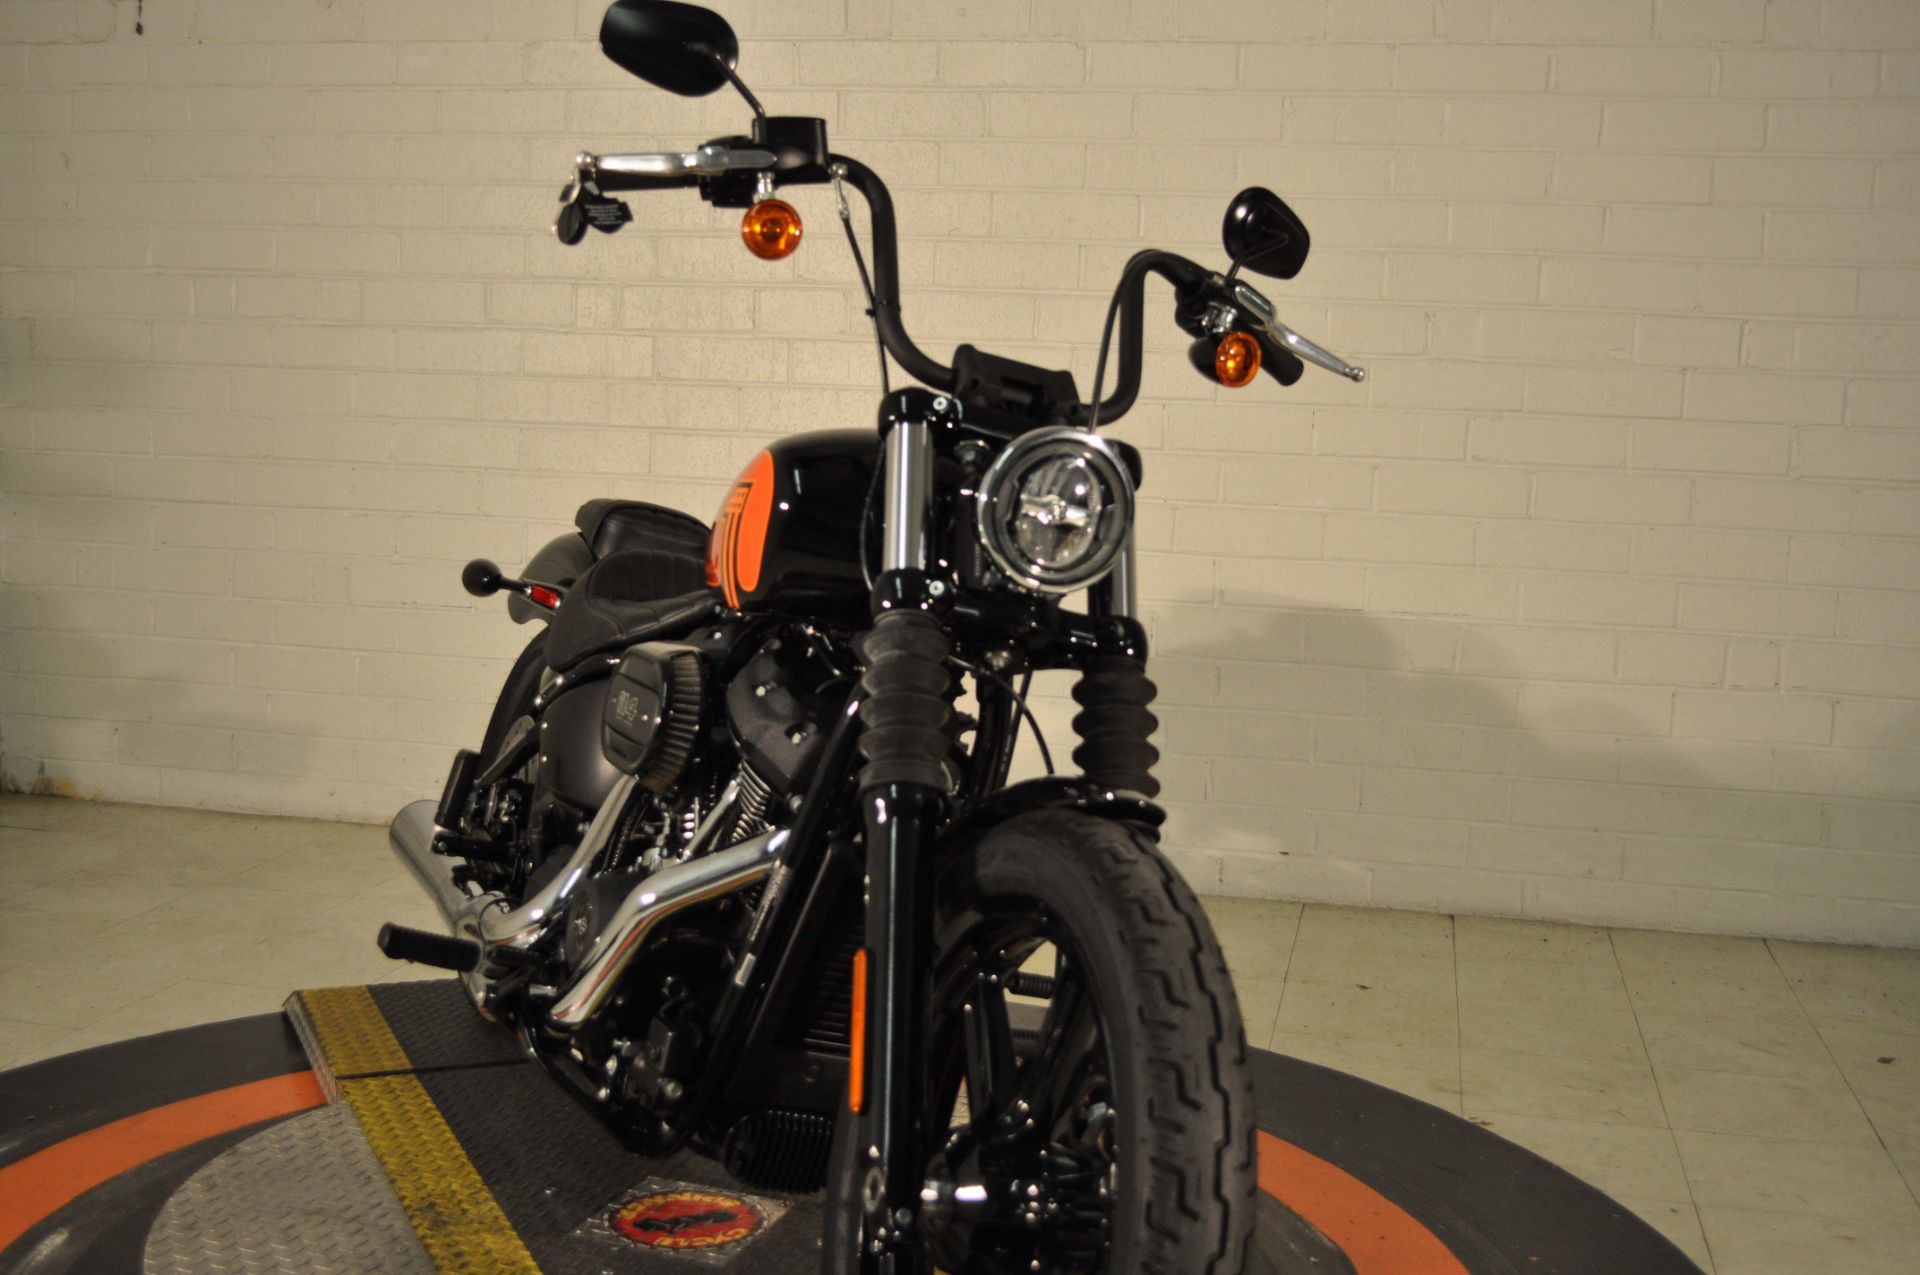 2022 Harley-Davidson Street Bob® 114 in Winston Salem, North Carolina - Photo 10